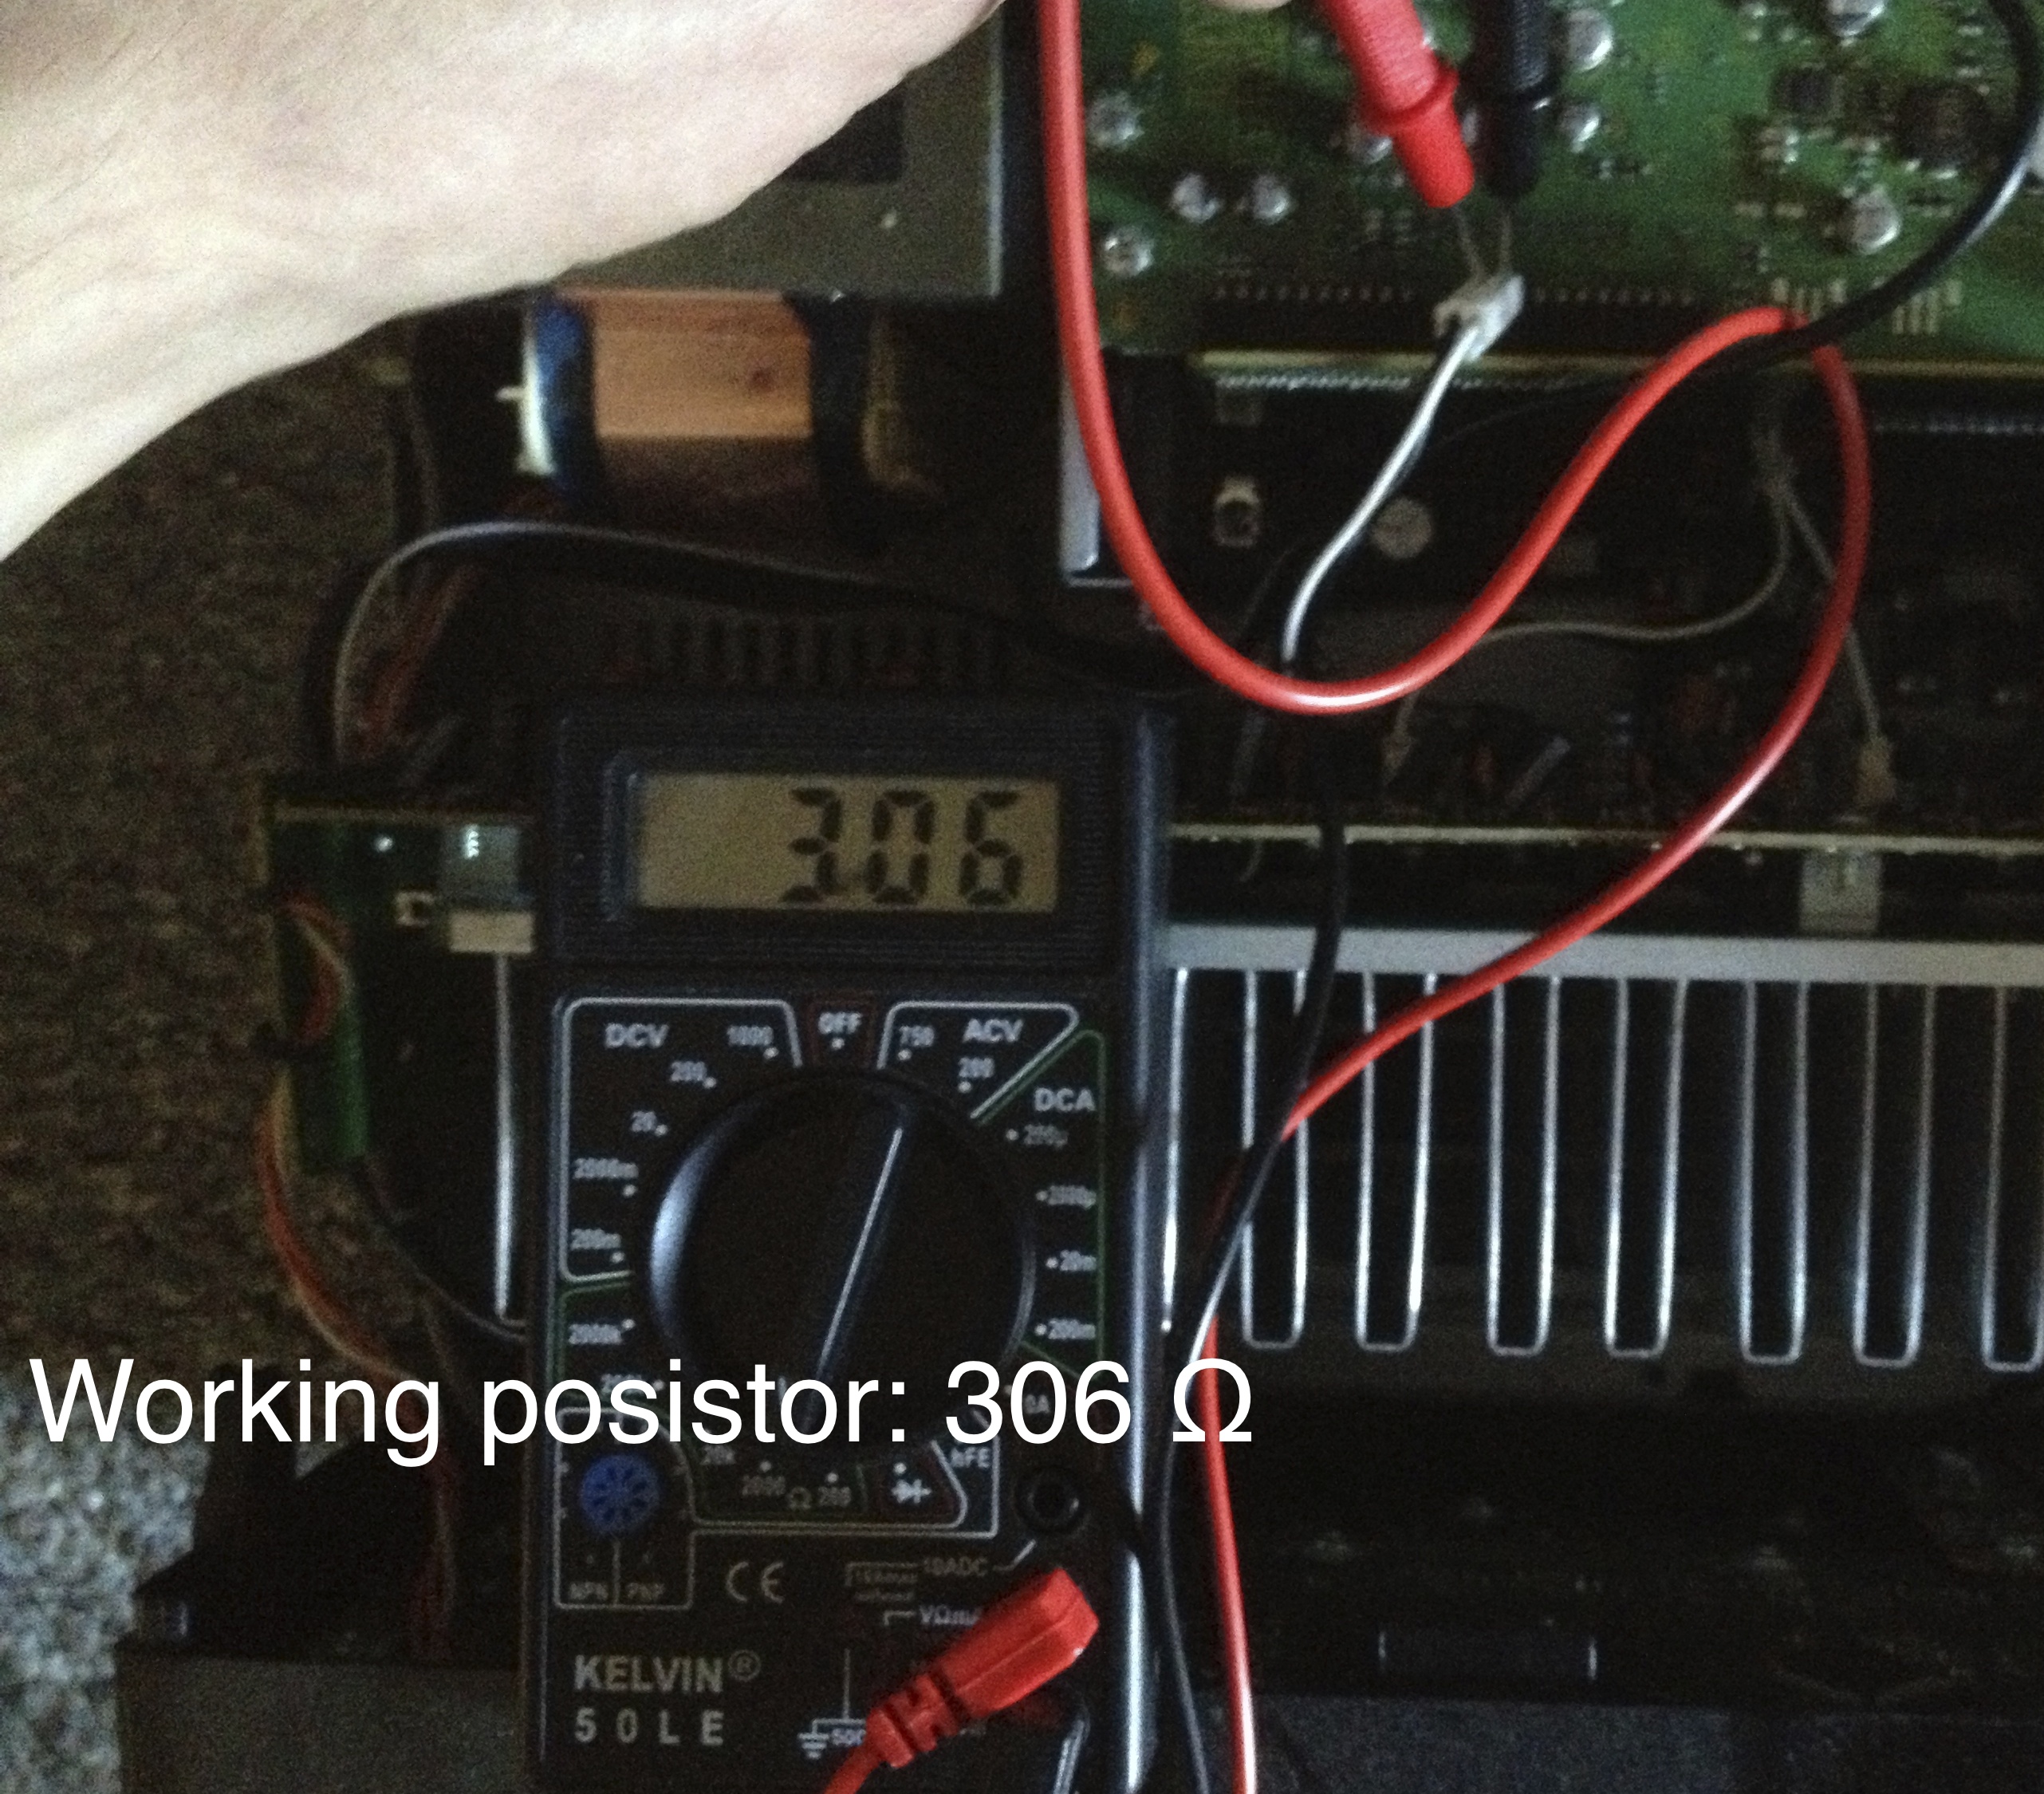 Working posistor: 306 ohm